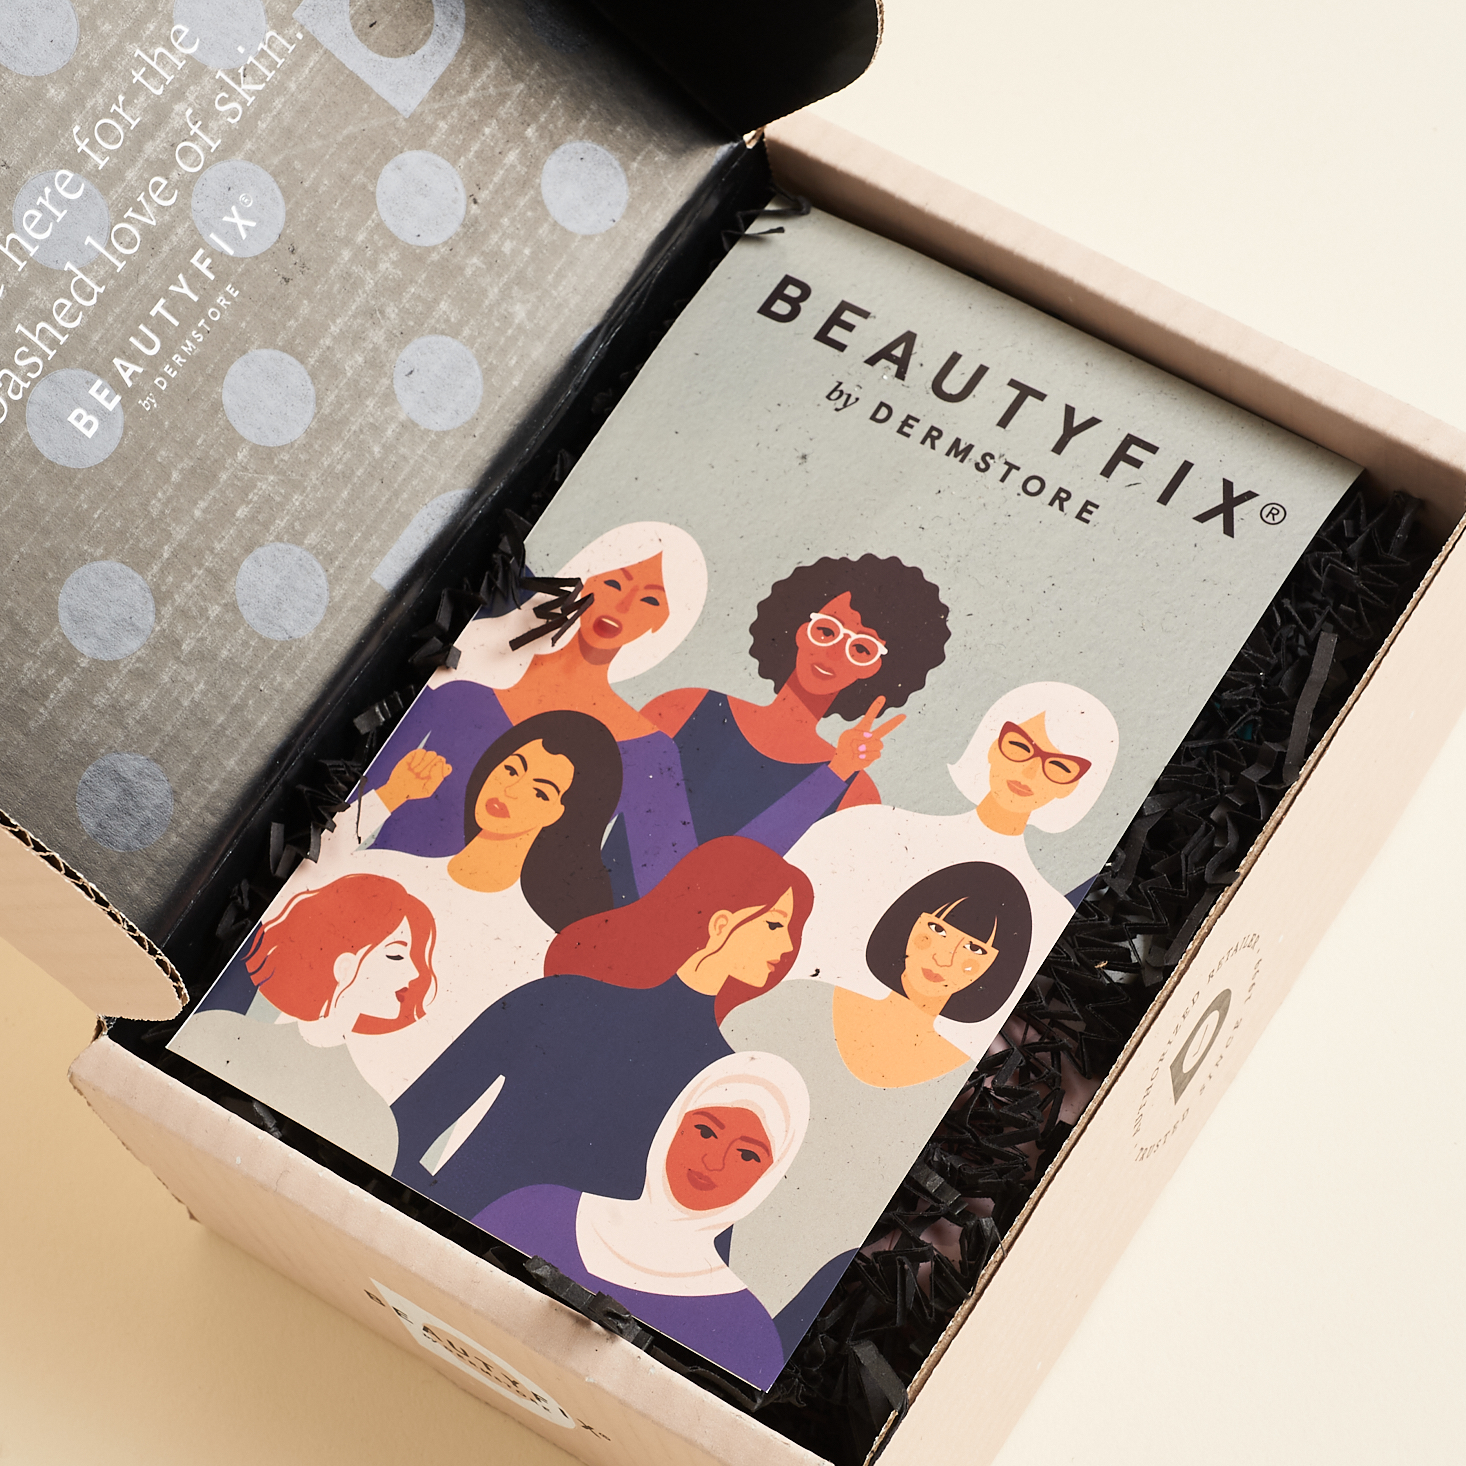 BeautyFIX Subscription Box Review March 2020 MSA